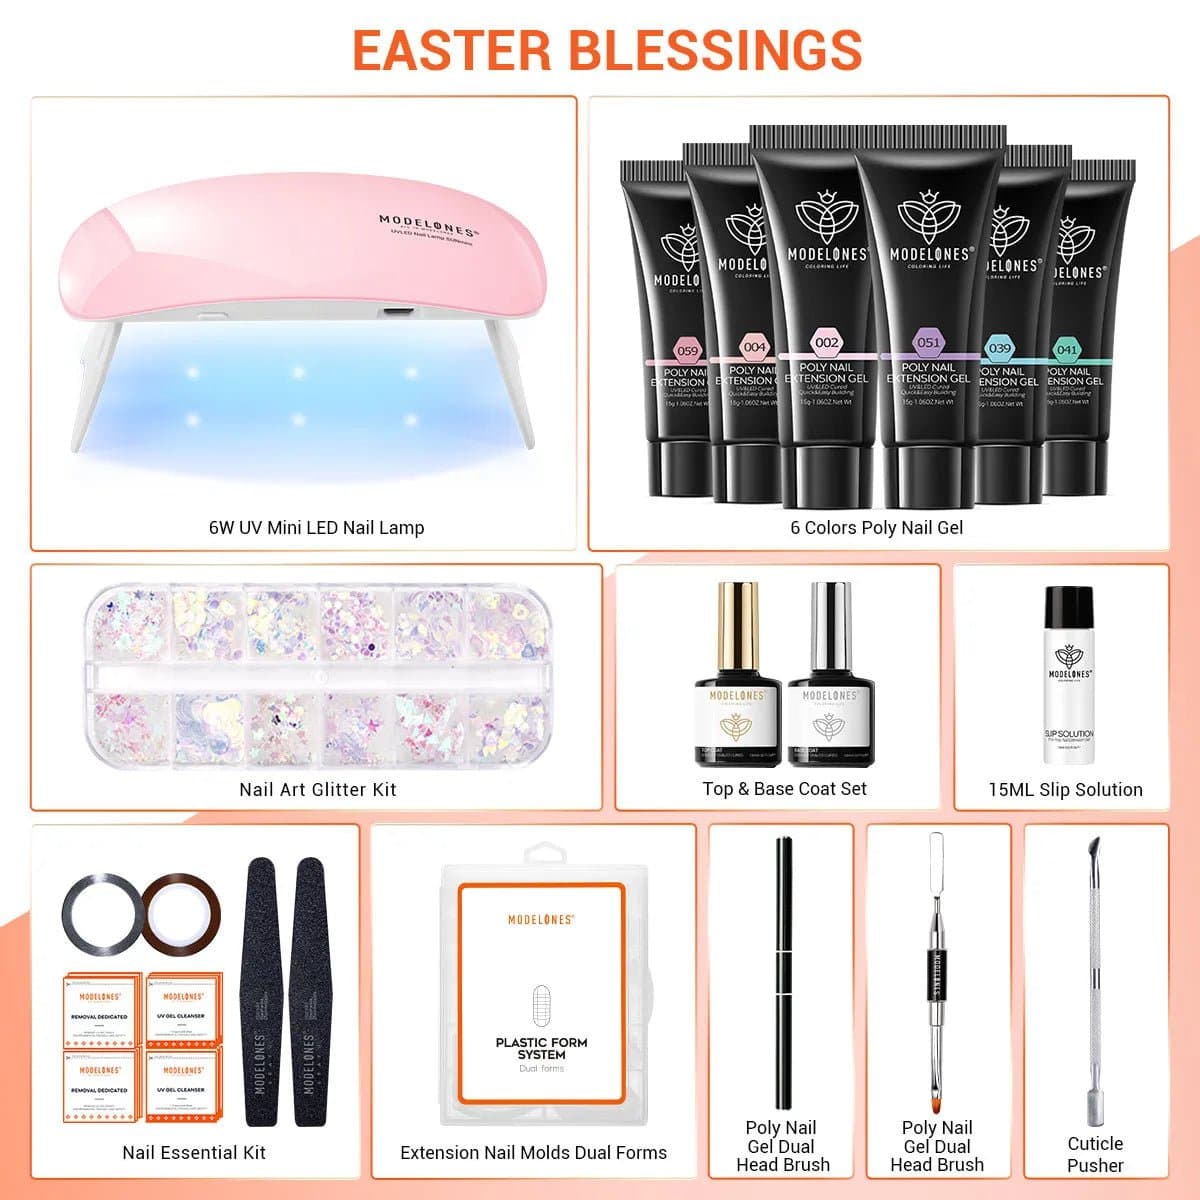 Easter Blessings - 6 Colors Poly Nail Gel Kit (15g) - MODELONES.com